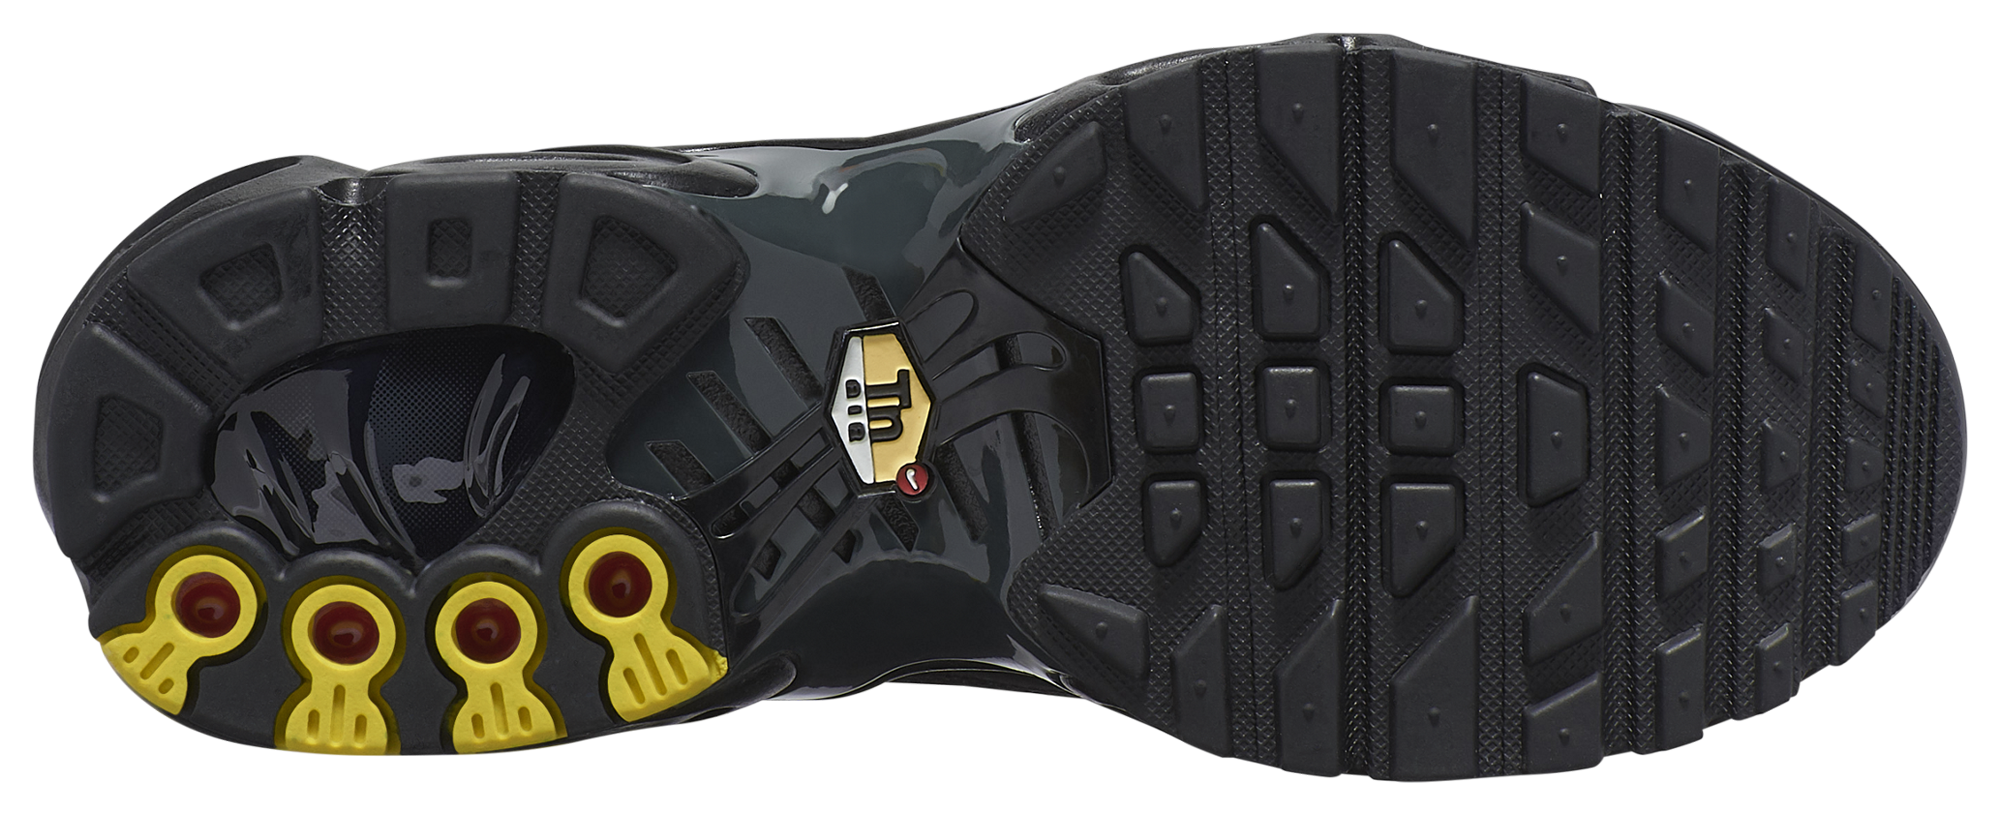 New NIKE Air Max Plus TN classic Men's Athletic Sneakers triple black all  sizes